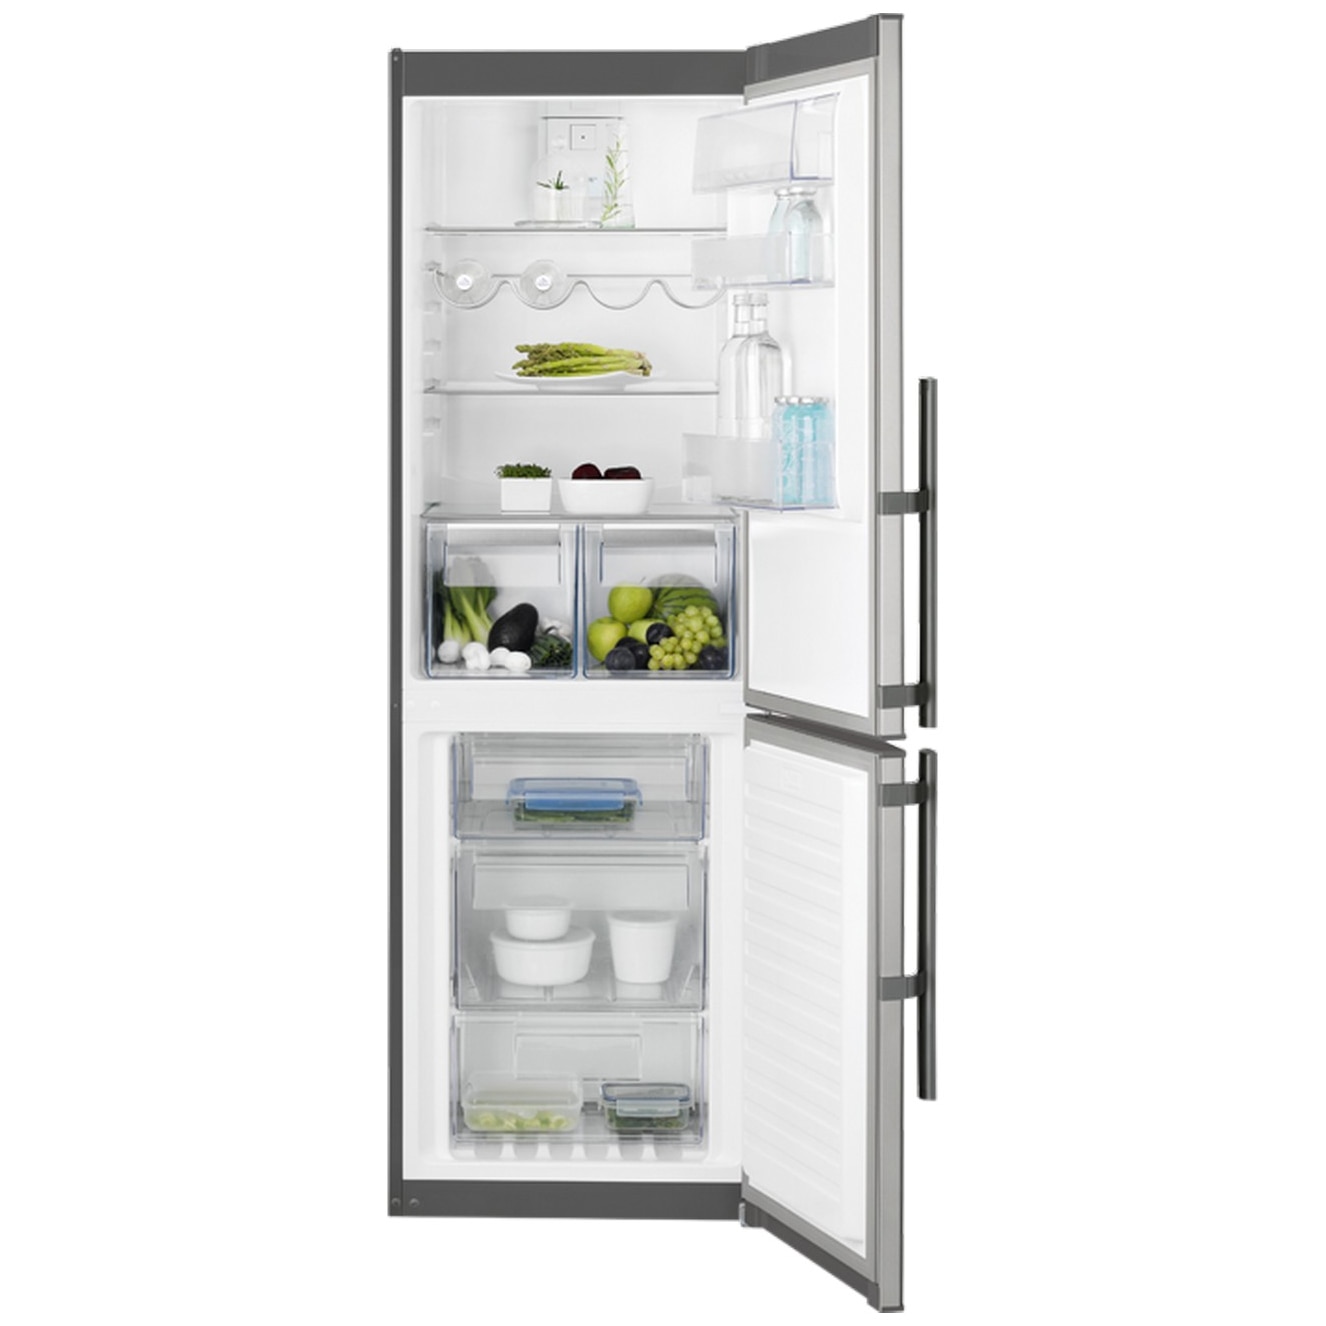 Хладилник Electrolux EN3454MOX с обем от 318 л.